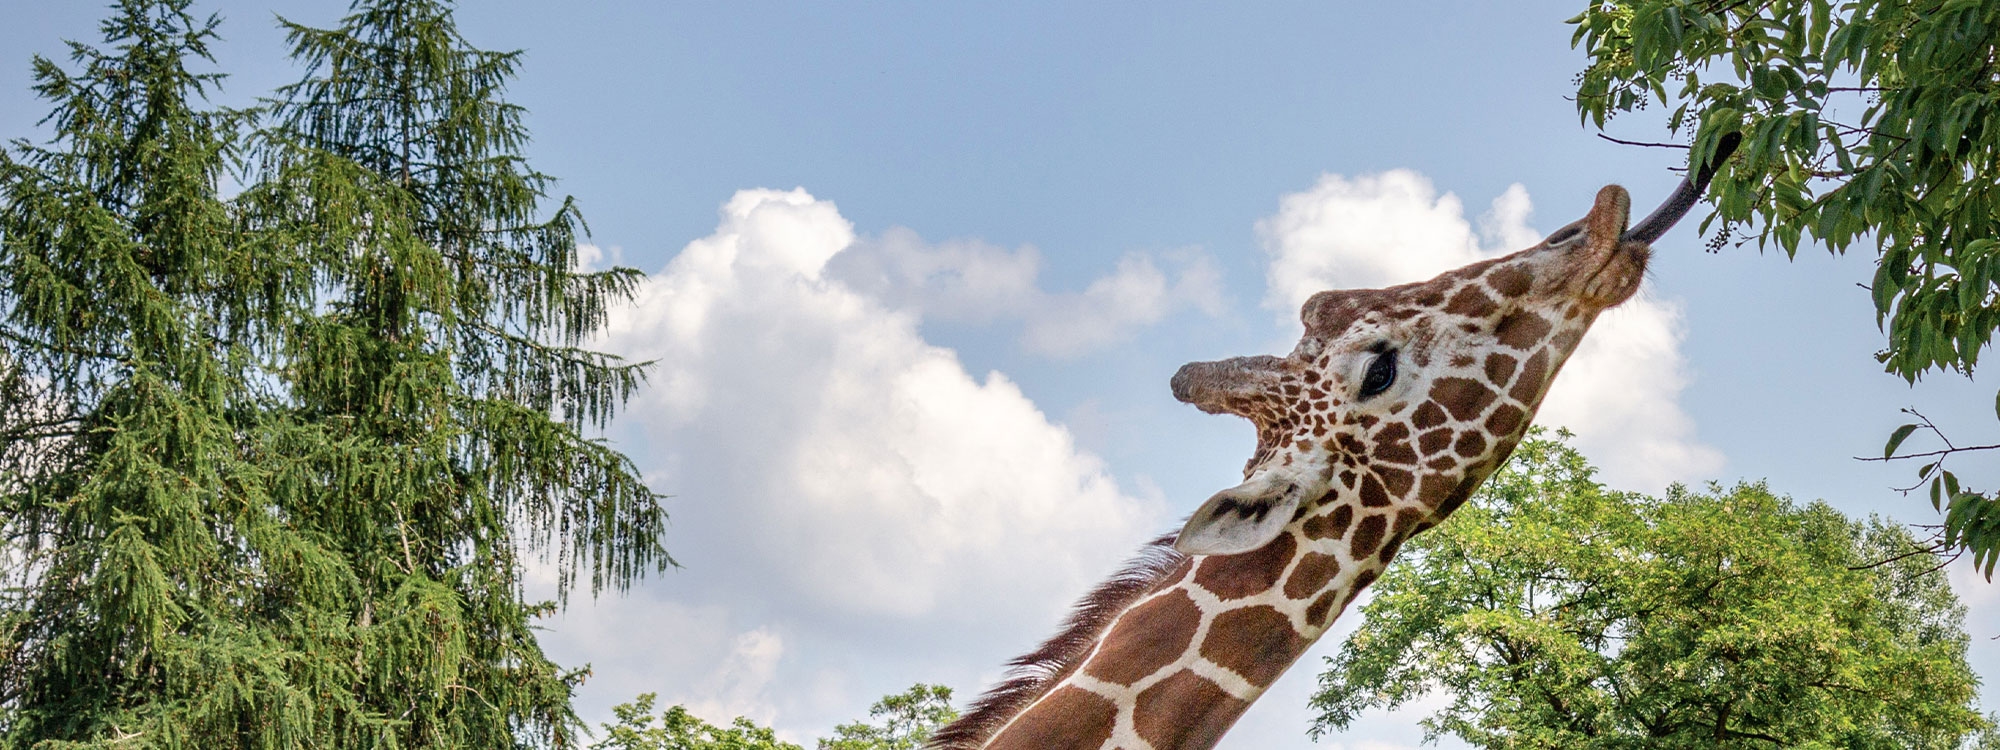 A giraffe reaching for a leaf